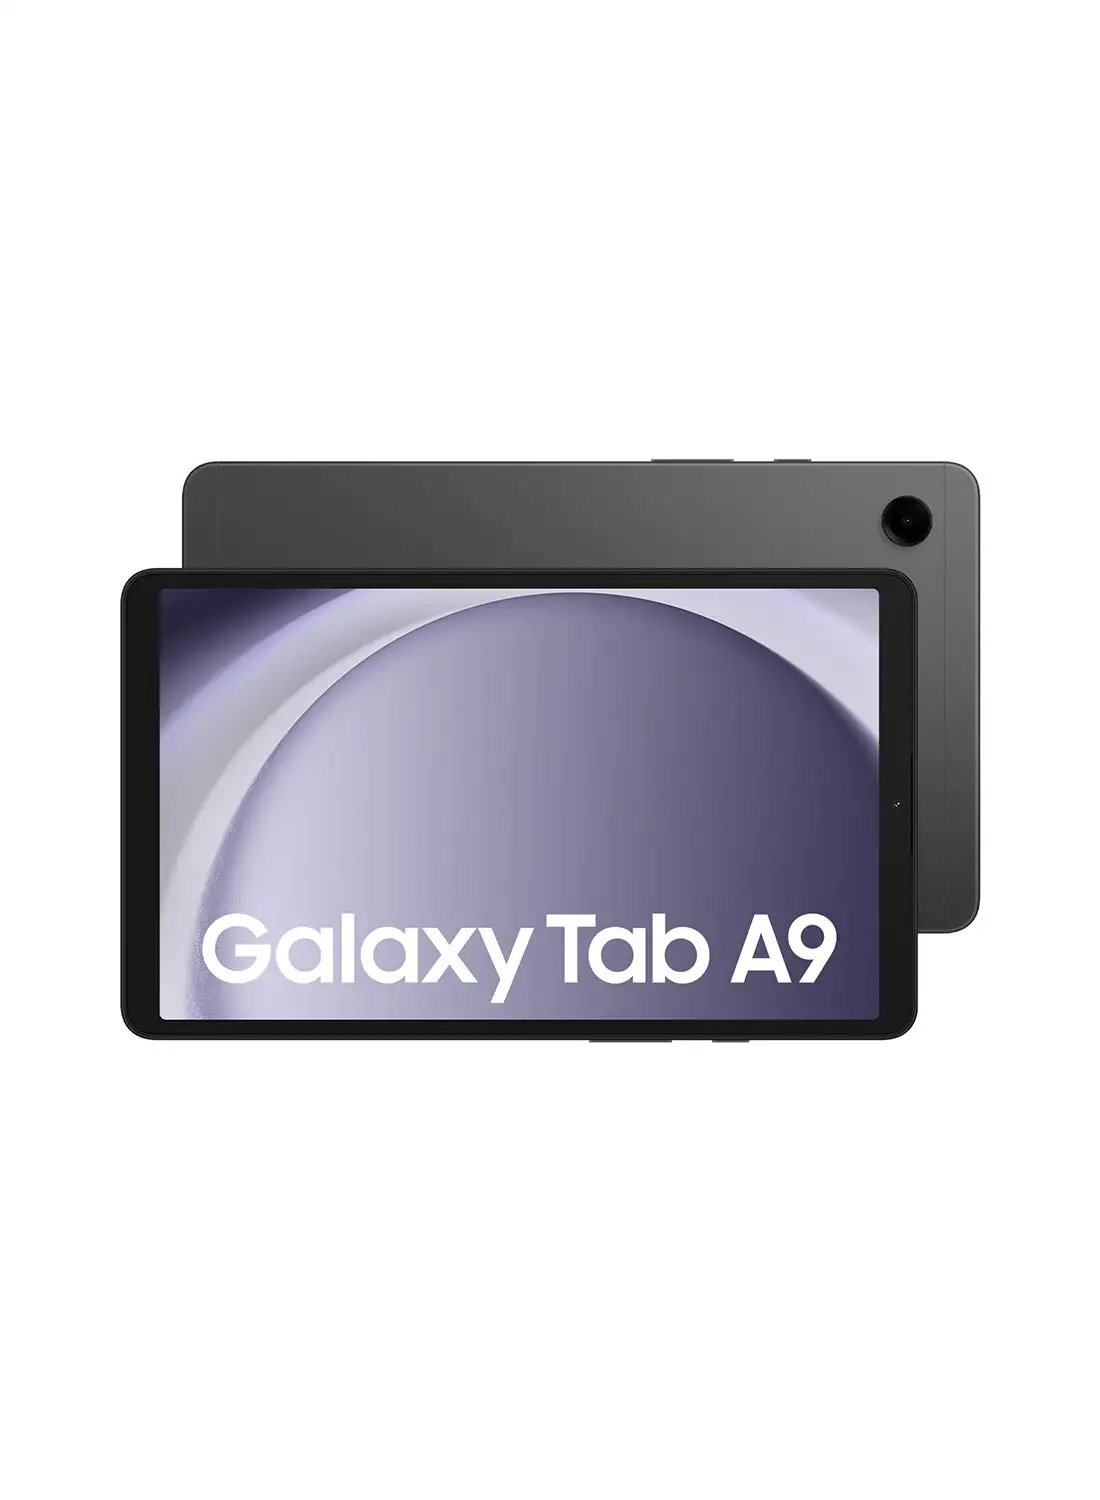 Samsung Galaxy Tab A9 Graphite 8GB RAM 128GB LTE - Middle East Version